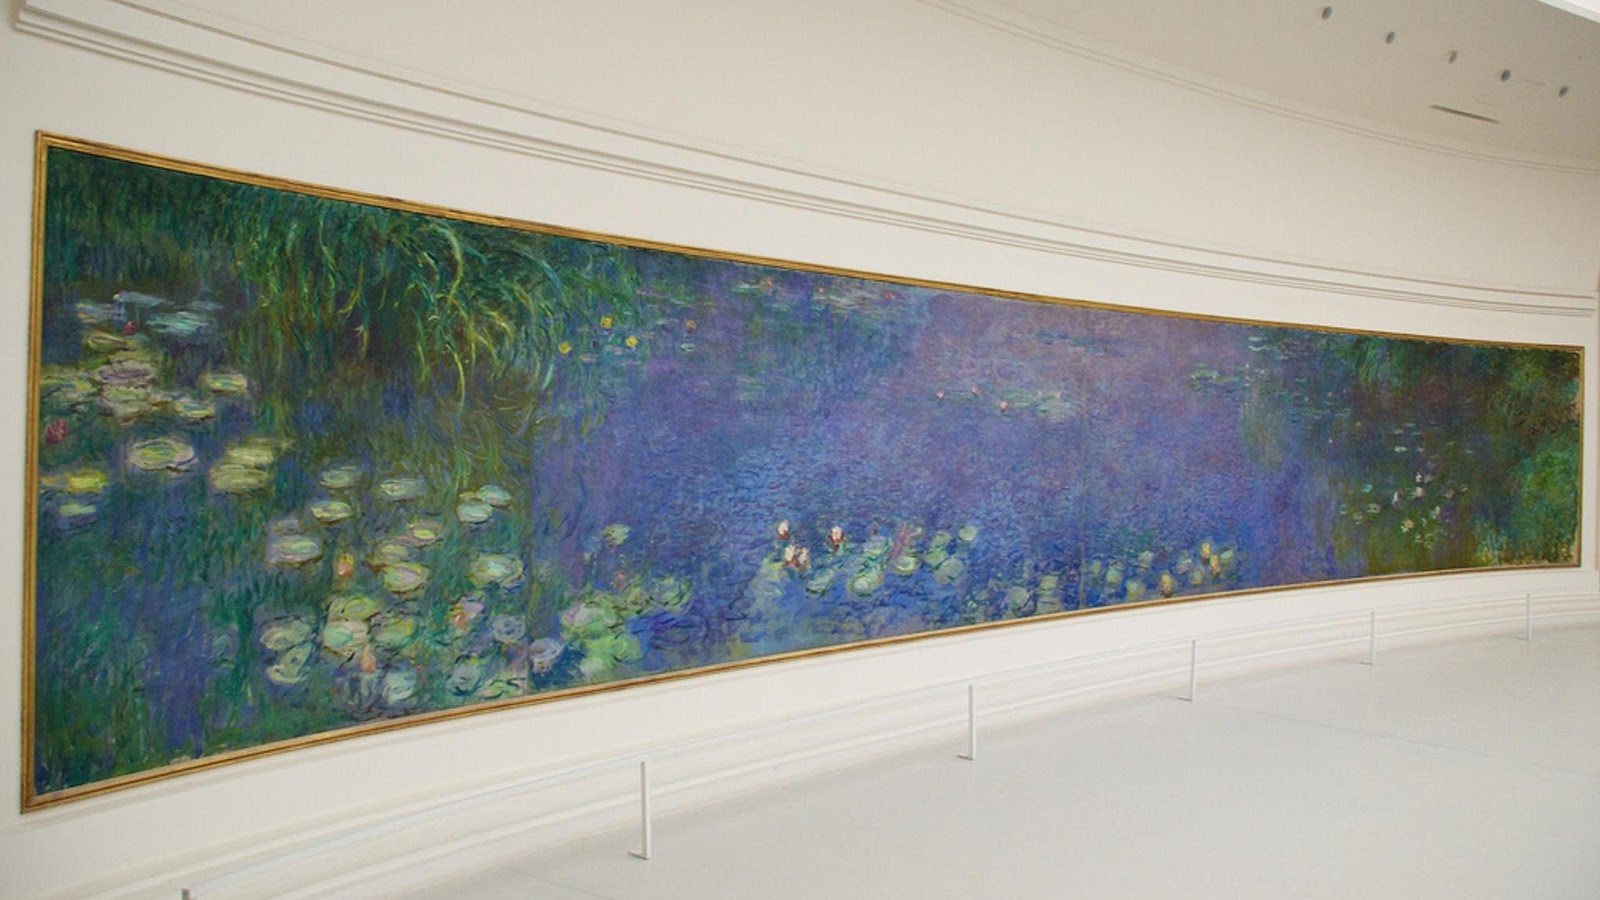 Claude+Monet-1840-1926 (859).jpg